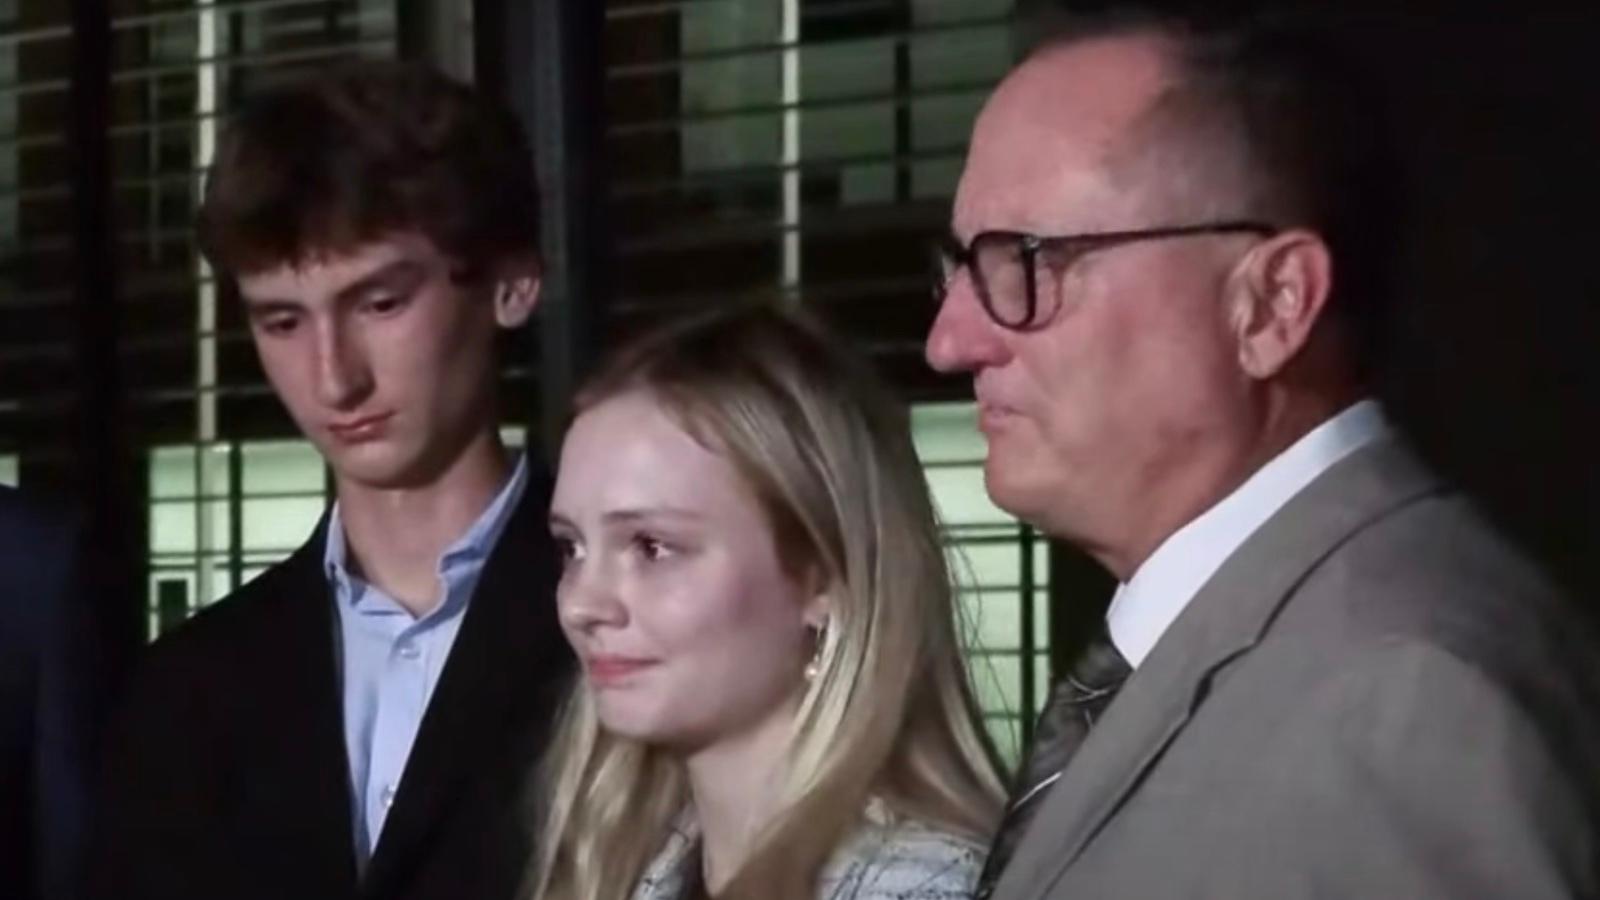 Maya Kowalski and her family speak to press following verdict